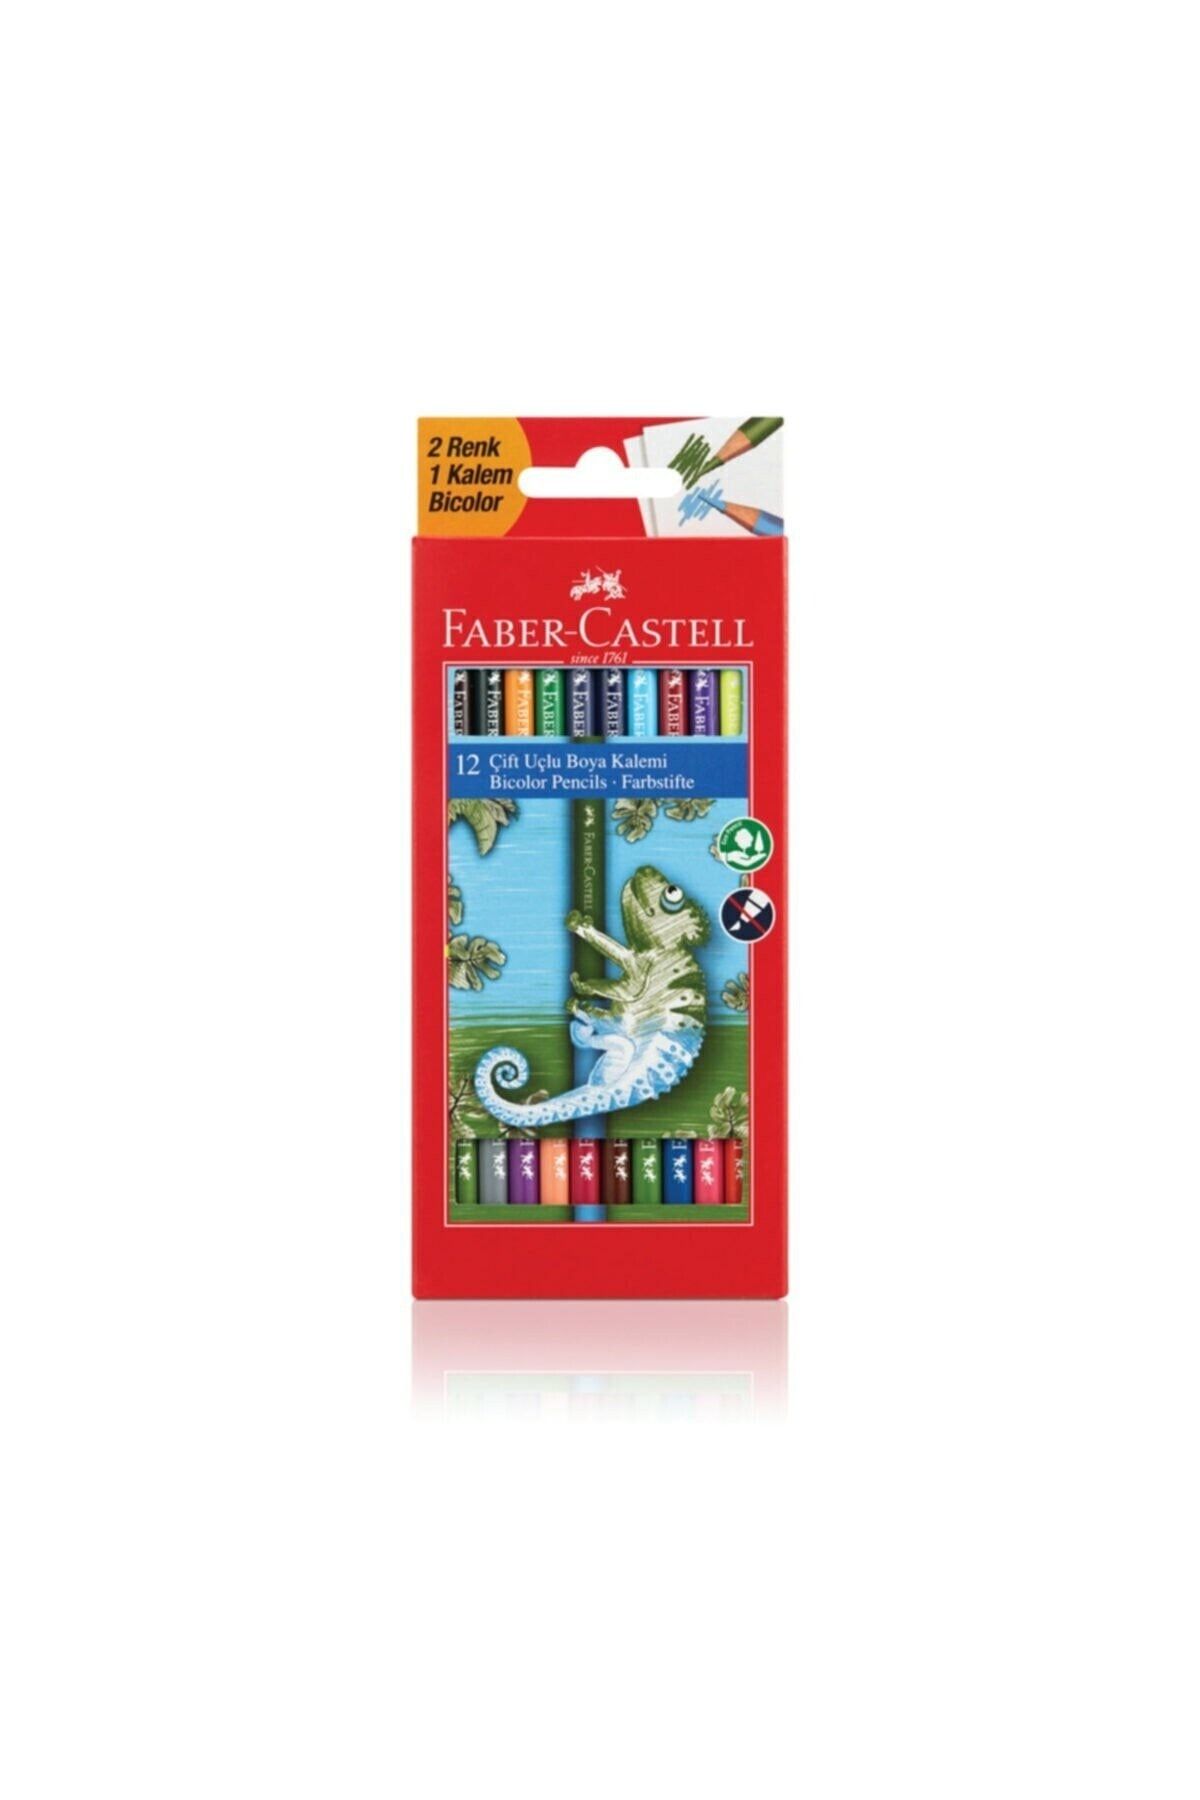 Faber Castell Yerli Çift Uçlu Boya Kalemi Seti 24 Renk